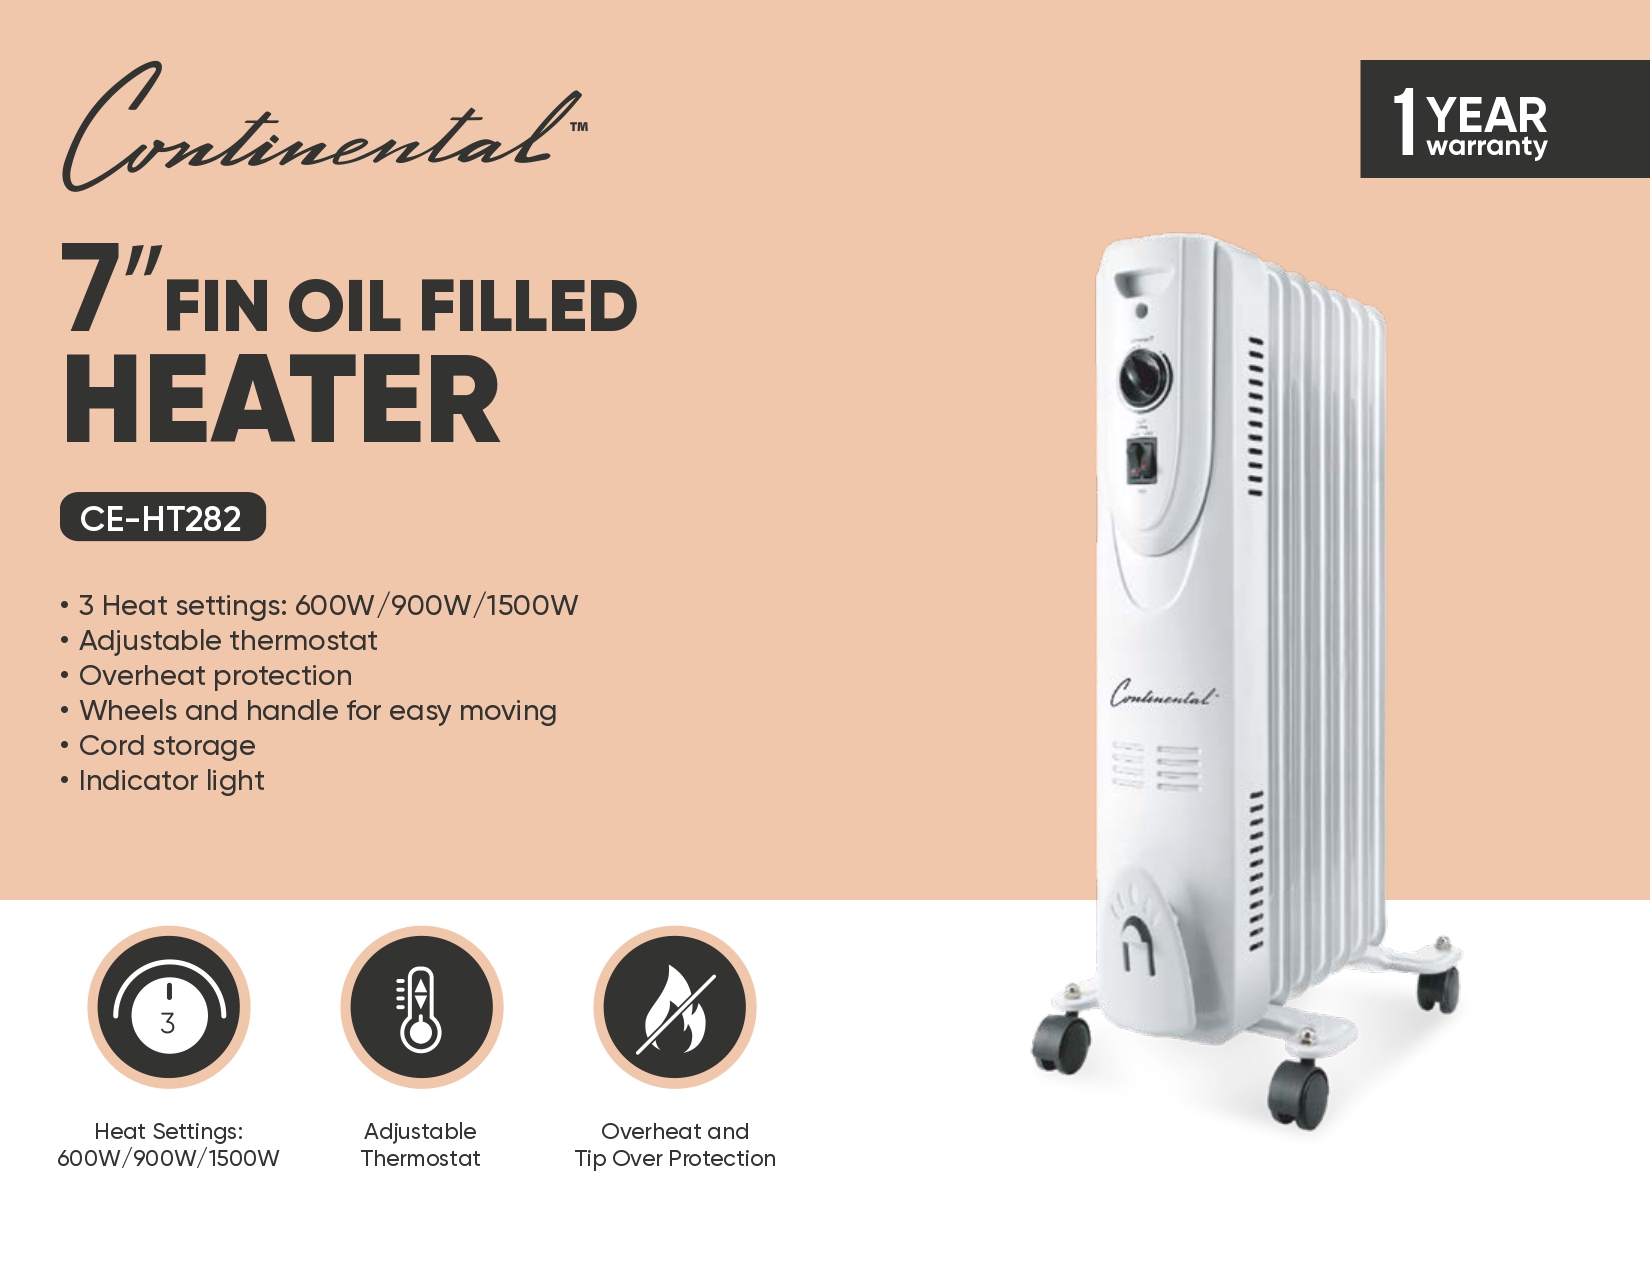 7 Fin Oil Filled Heater